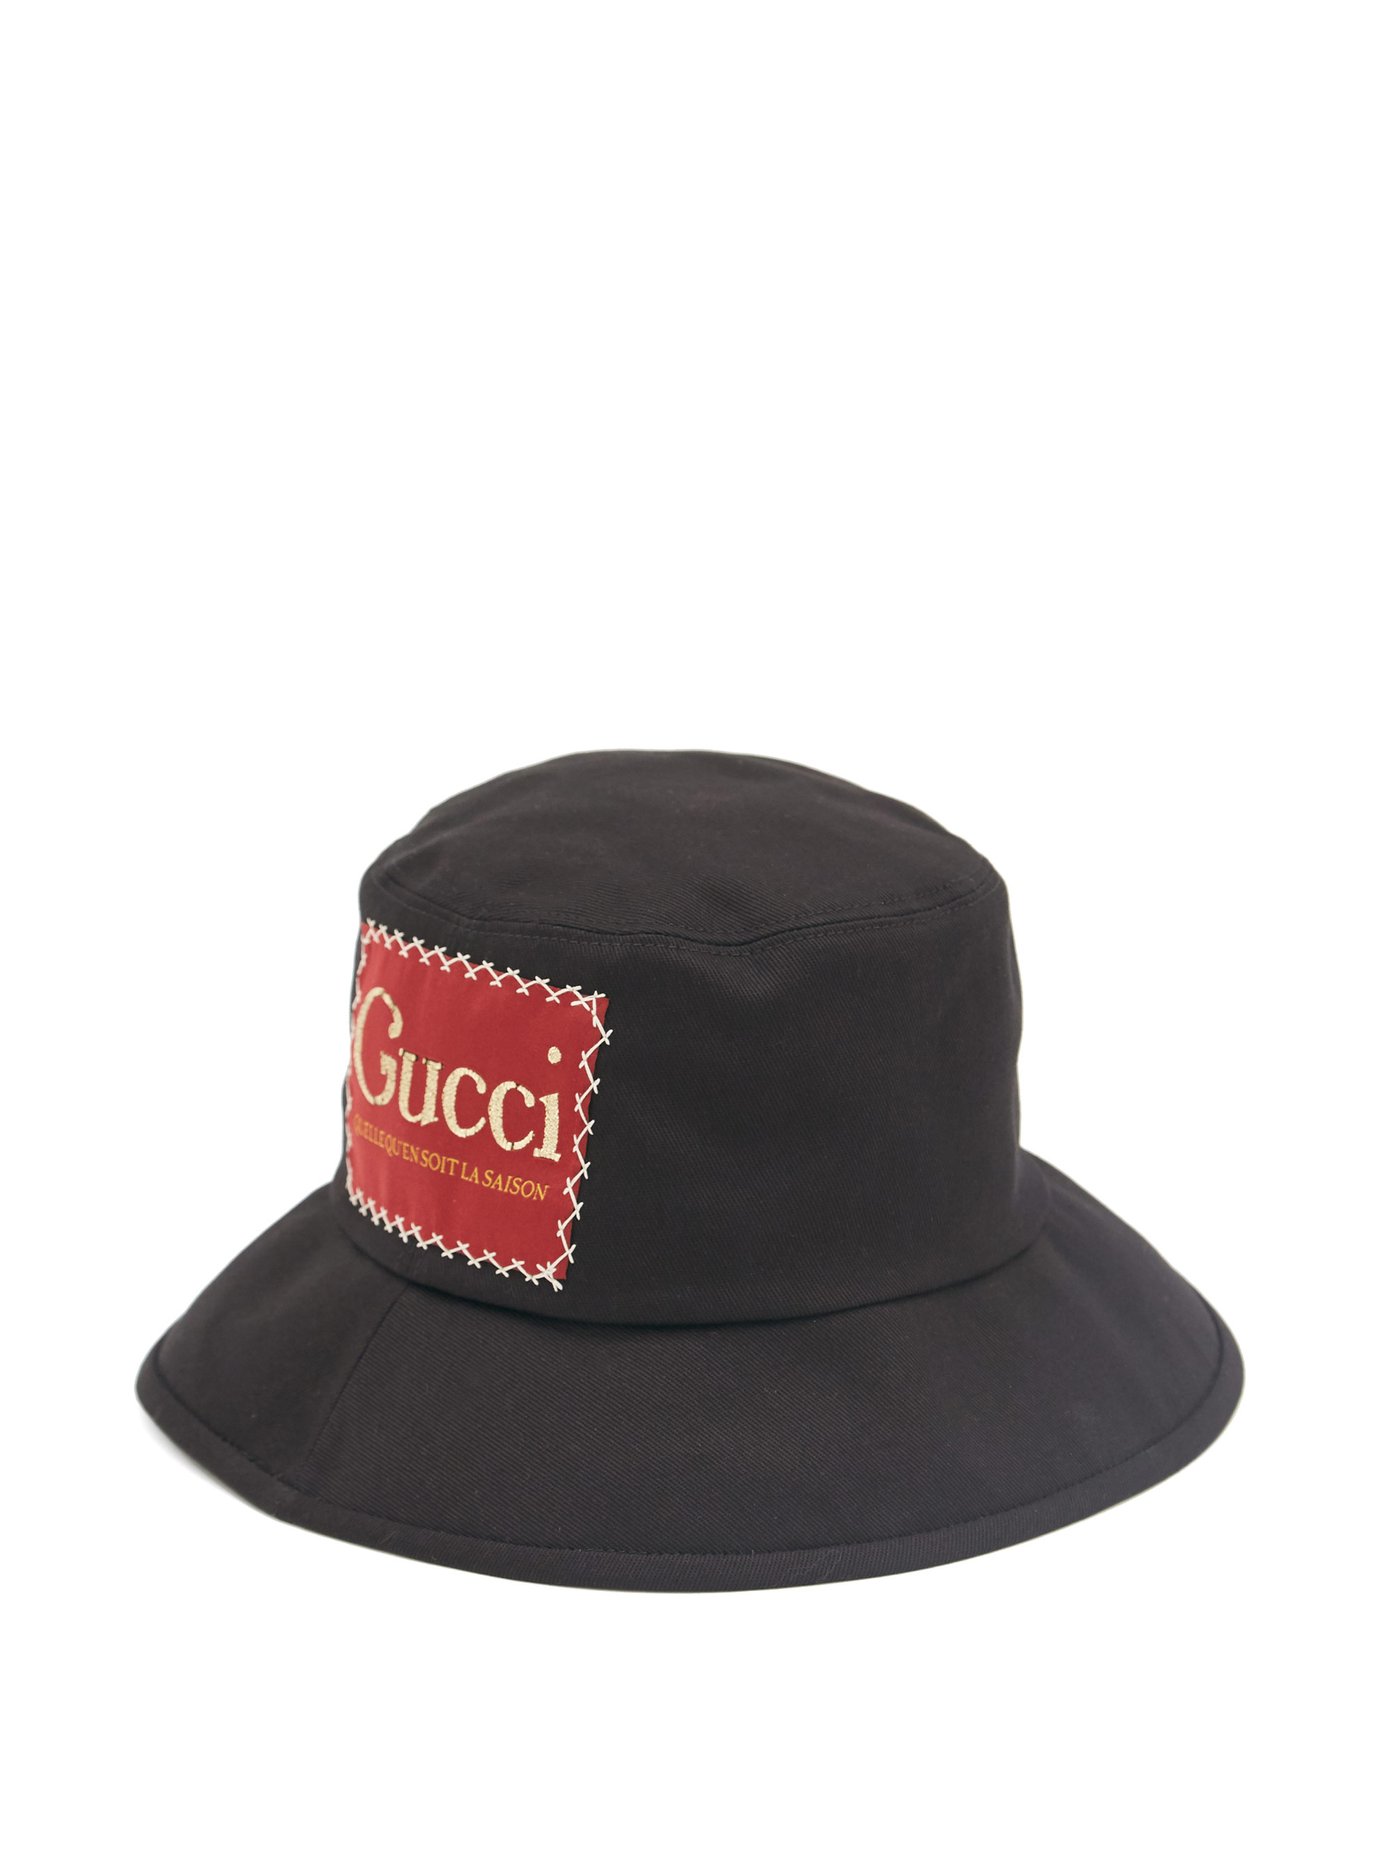 bucket gucci hat